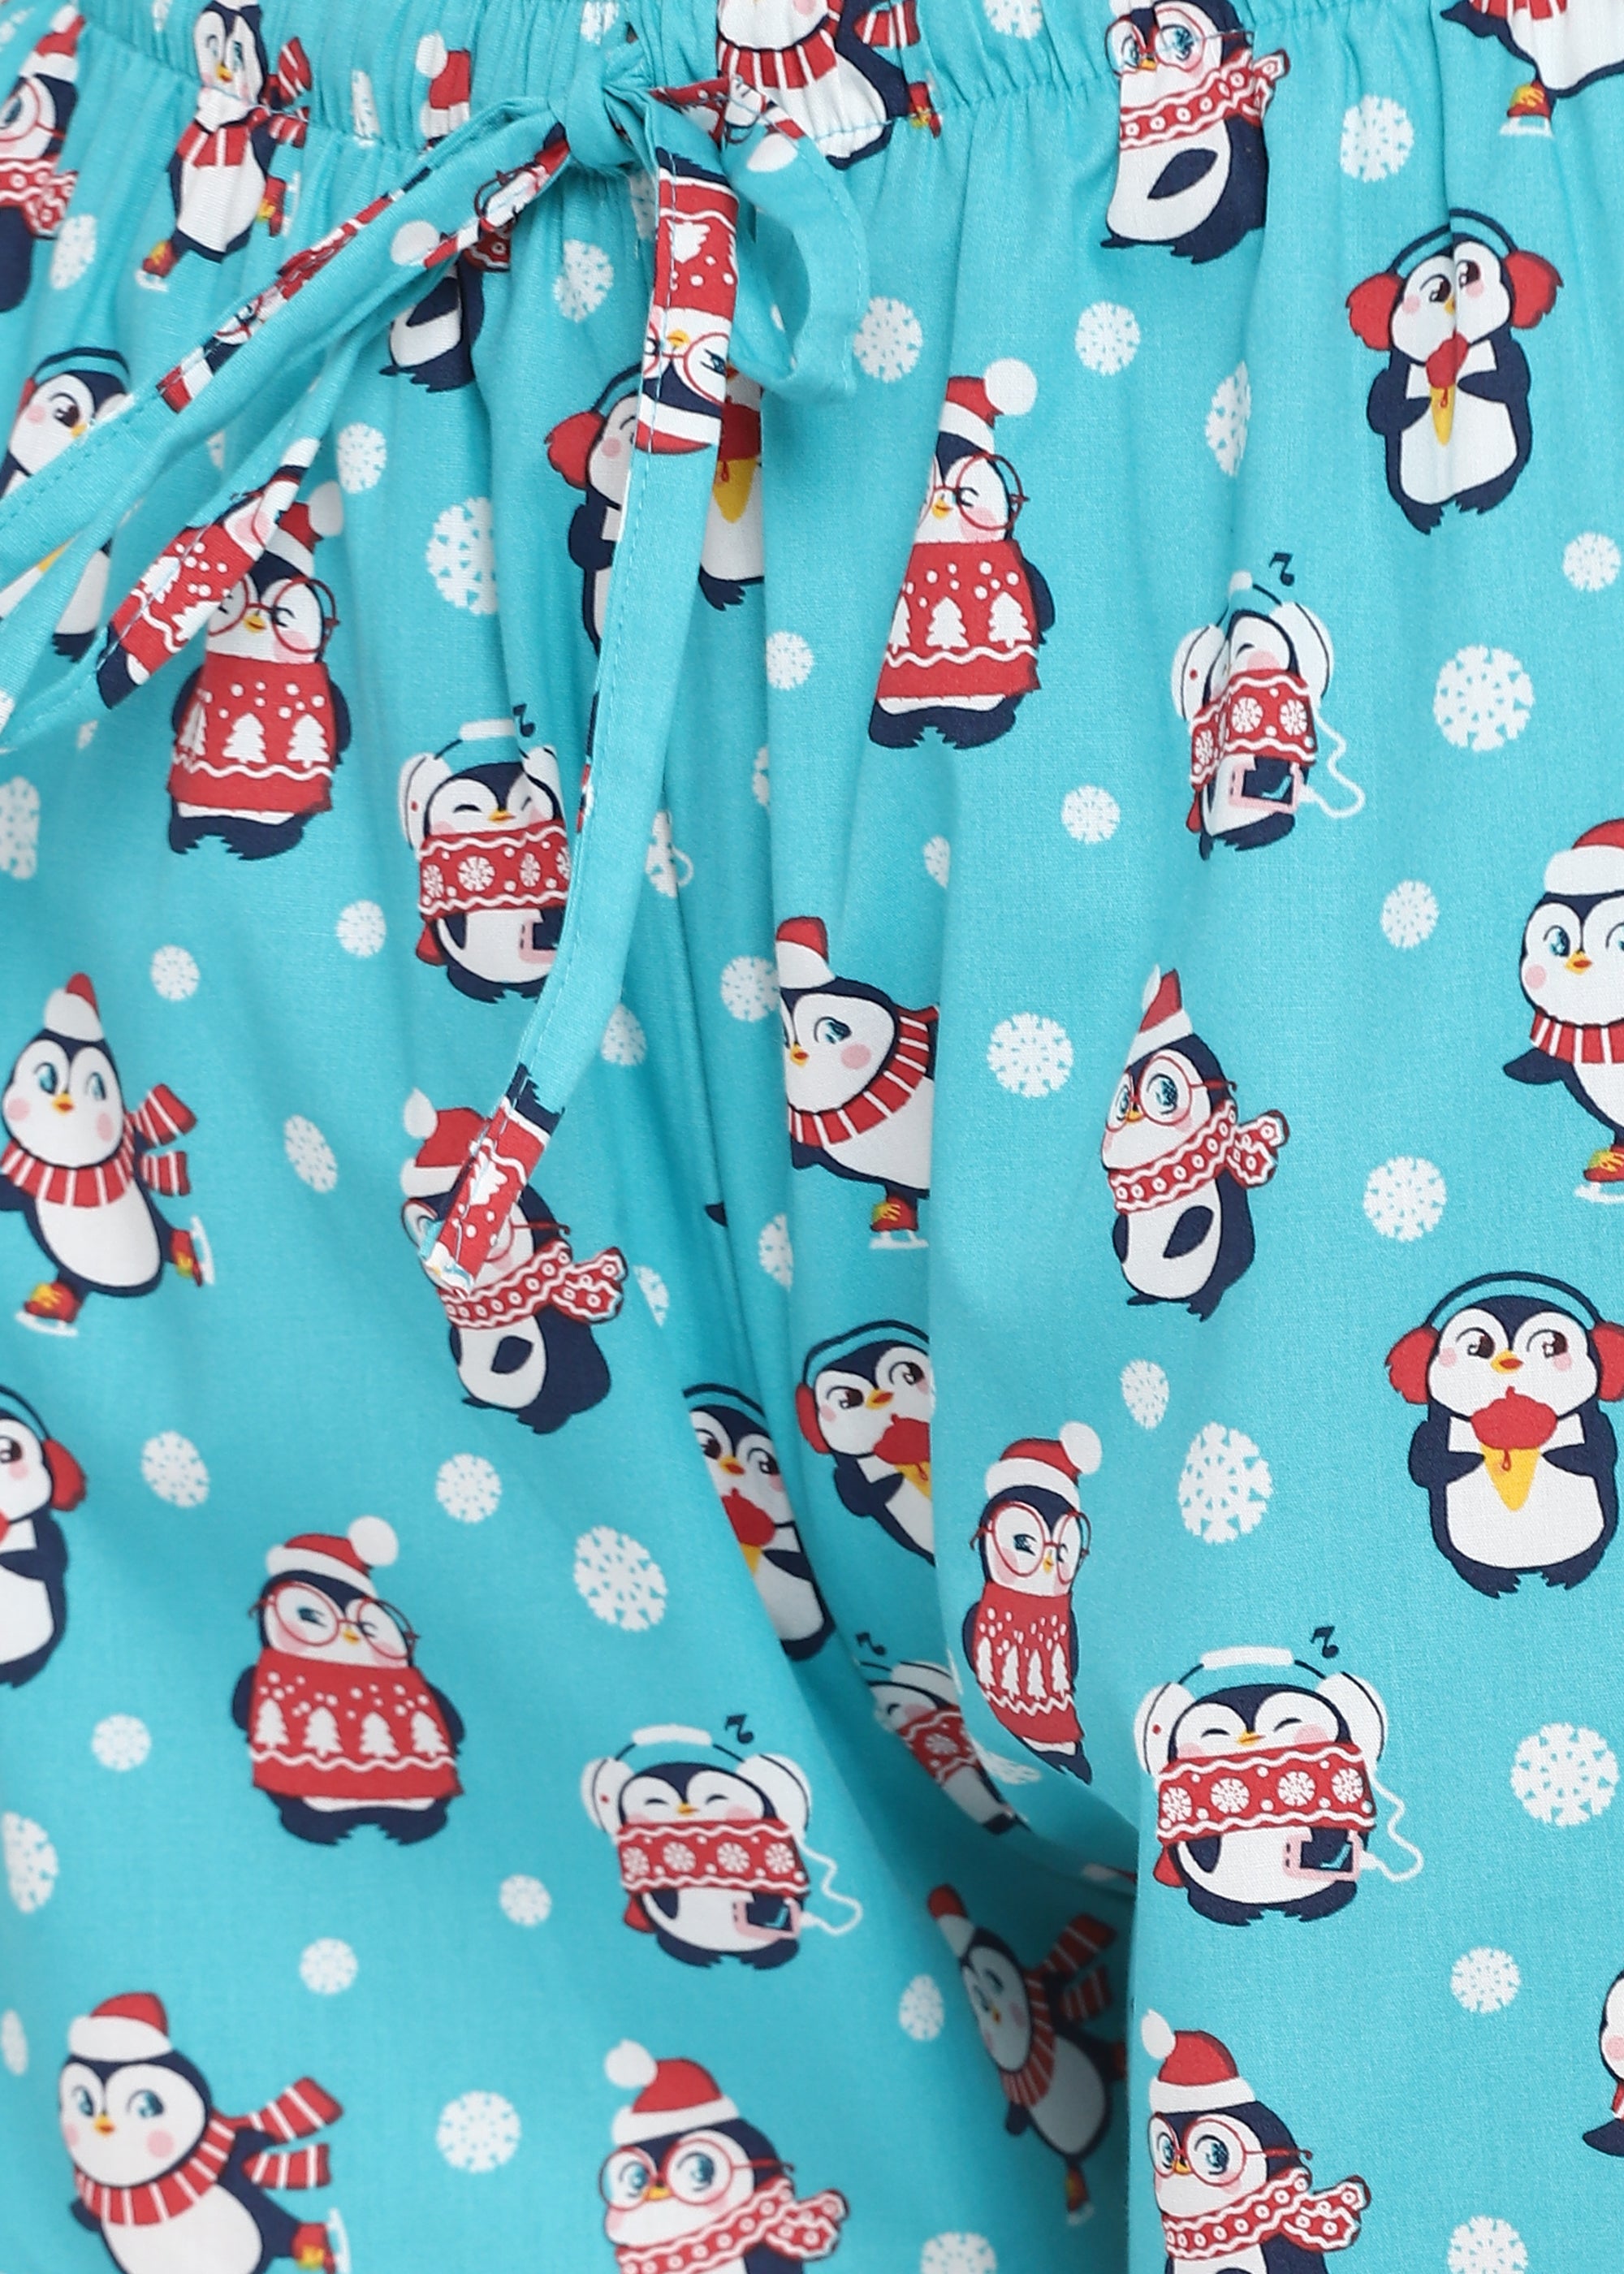 Cozy Penguin Print Long Sleeve Women's Night Suit - Shopbloom